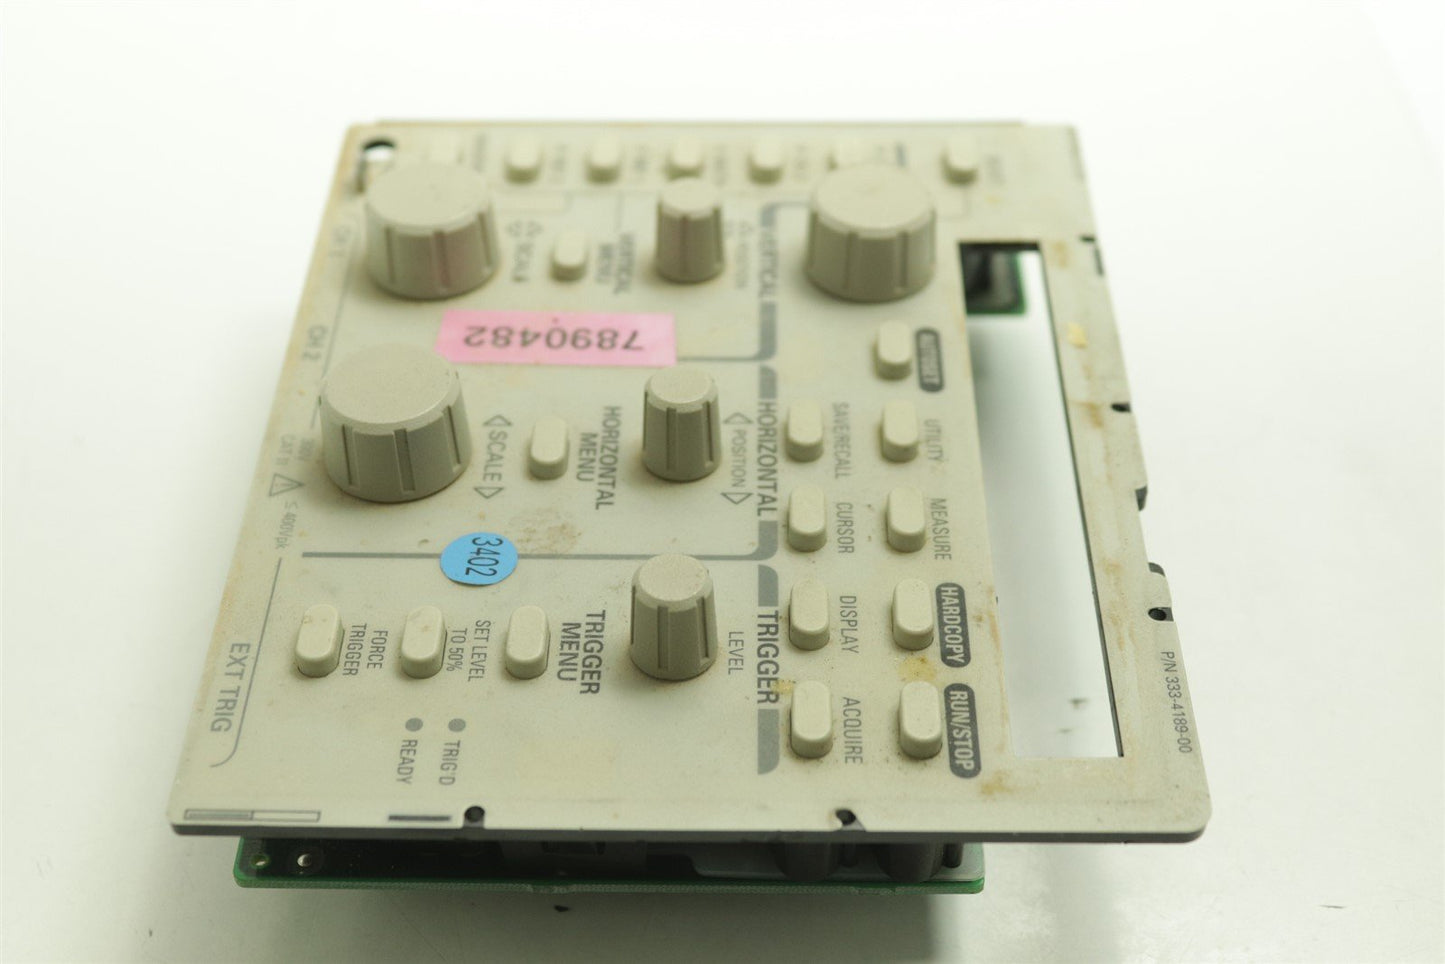 Tektronix TDS 360 Two-Channel Oscilloscope Front Panel Keyboard Assy 671-3737-00